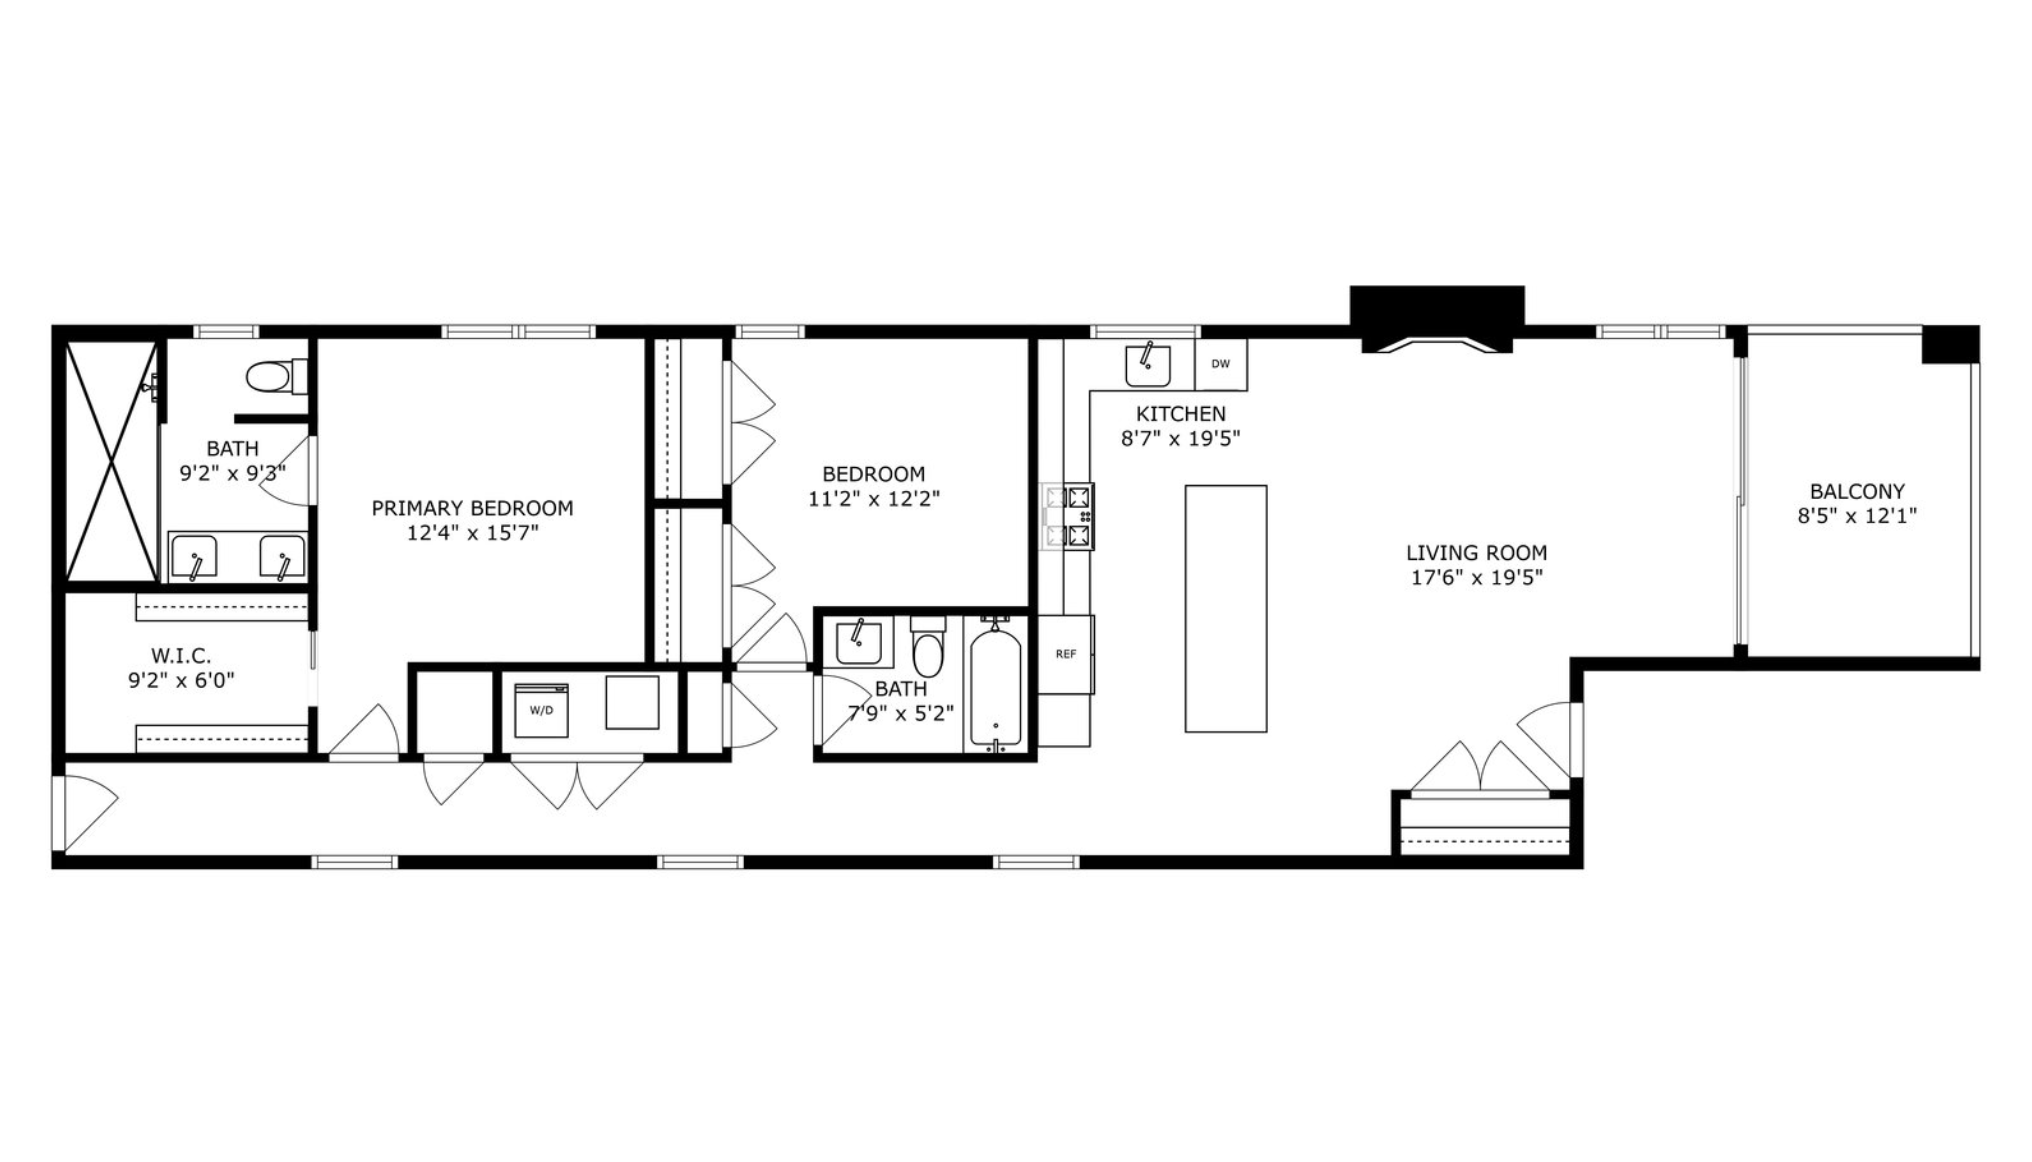 Middle simplex floor plan via Property People